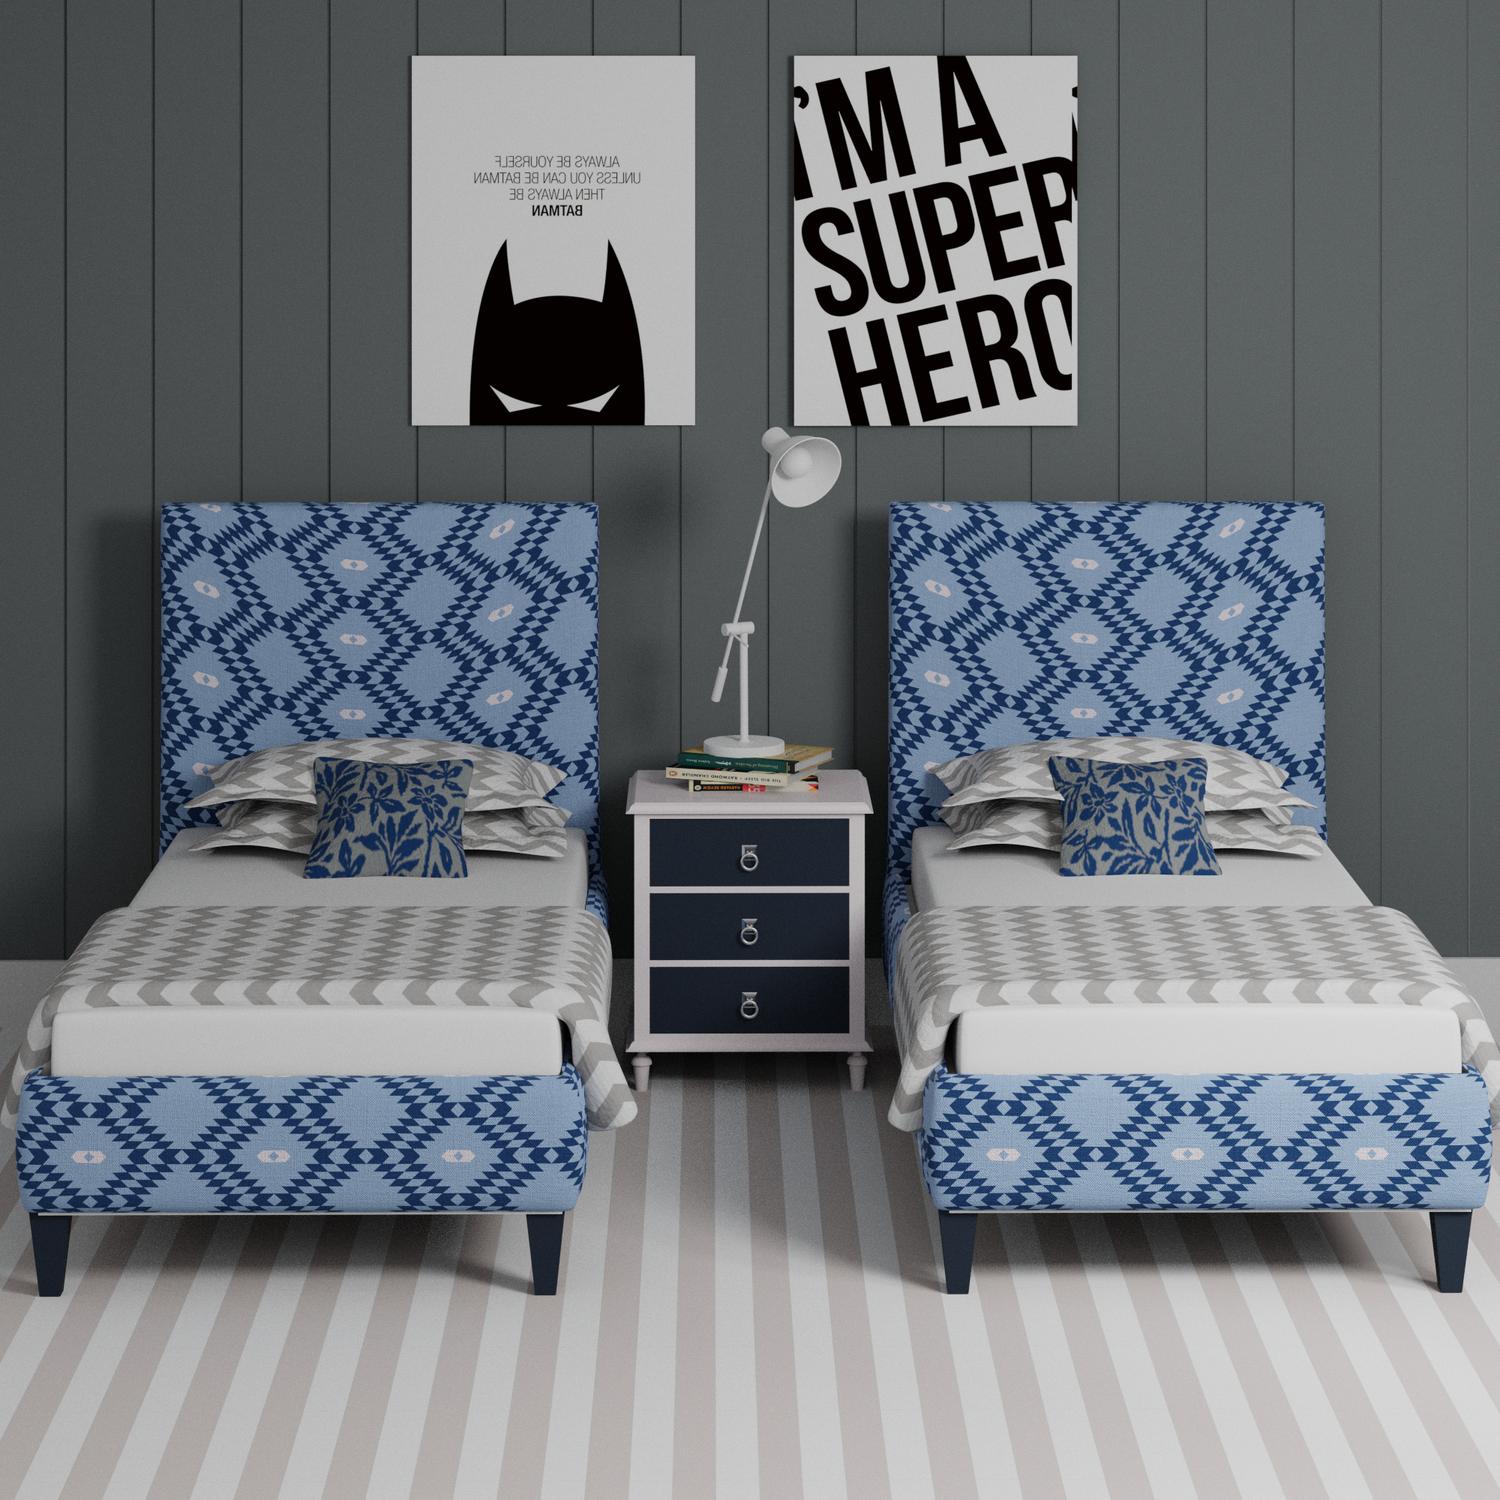 Yushan single upholstered bed - Image 2